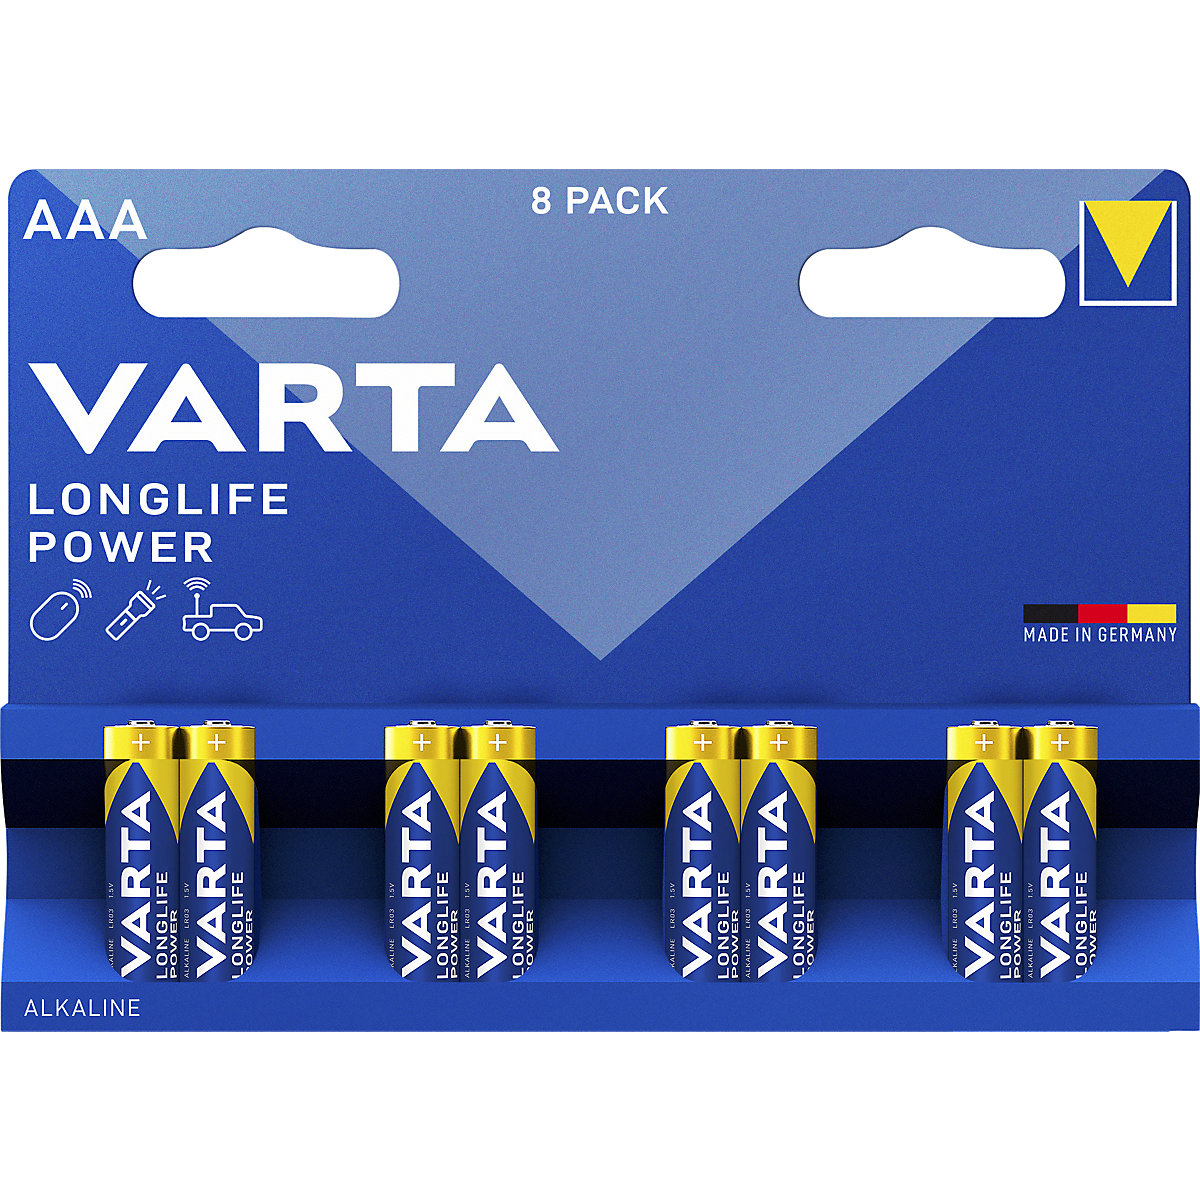 Baterija LONGLIFE Power – VARTA, AAA, DE 8 kosov, od 10 DE-2